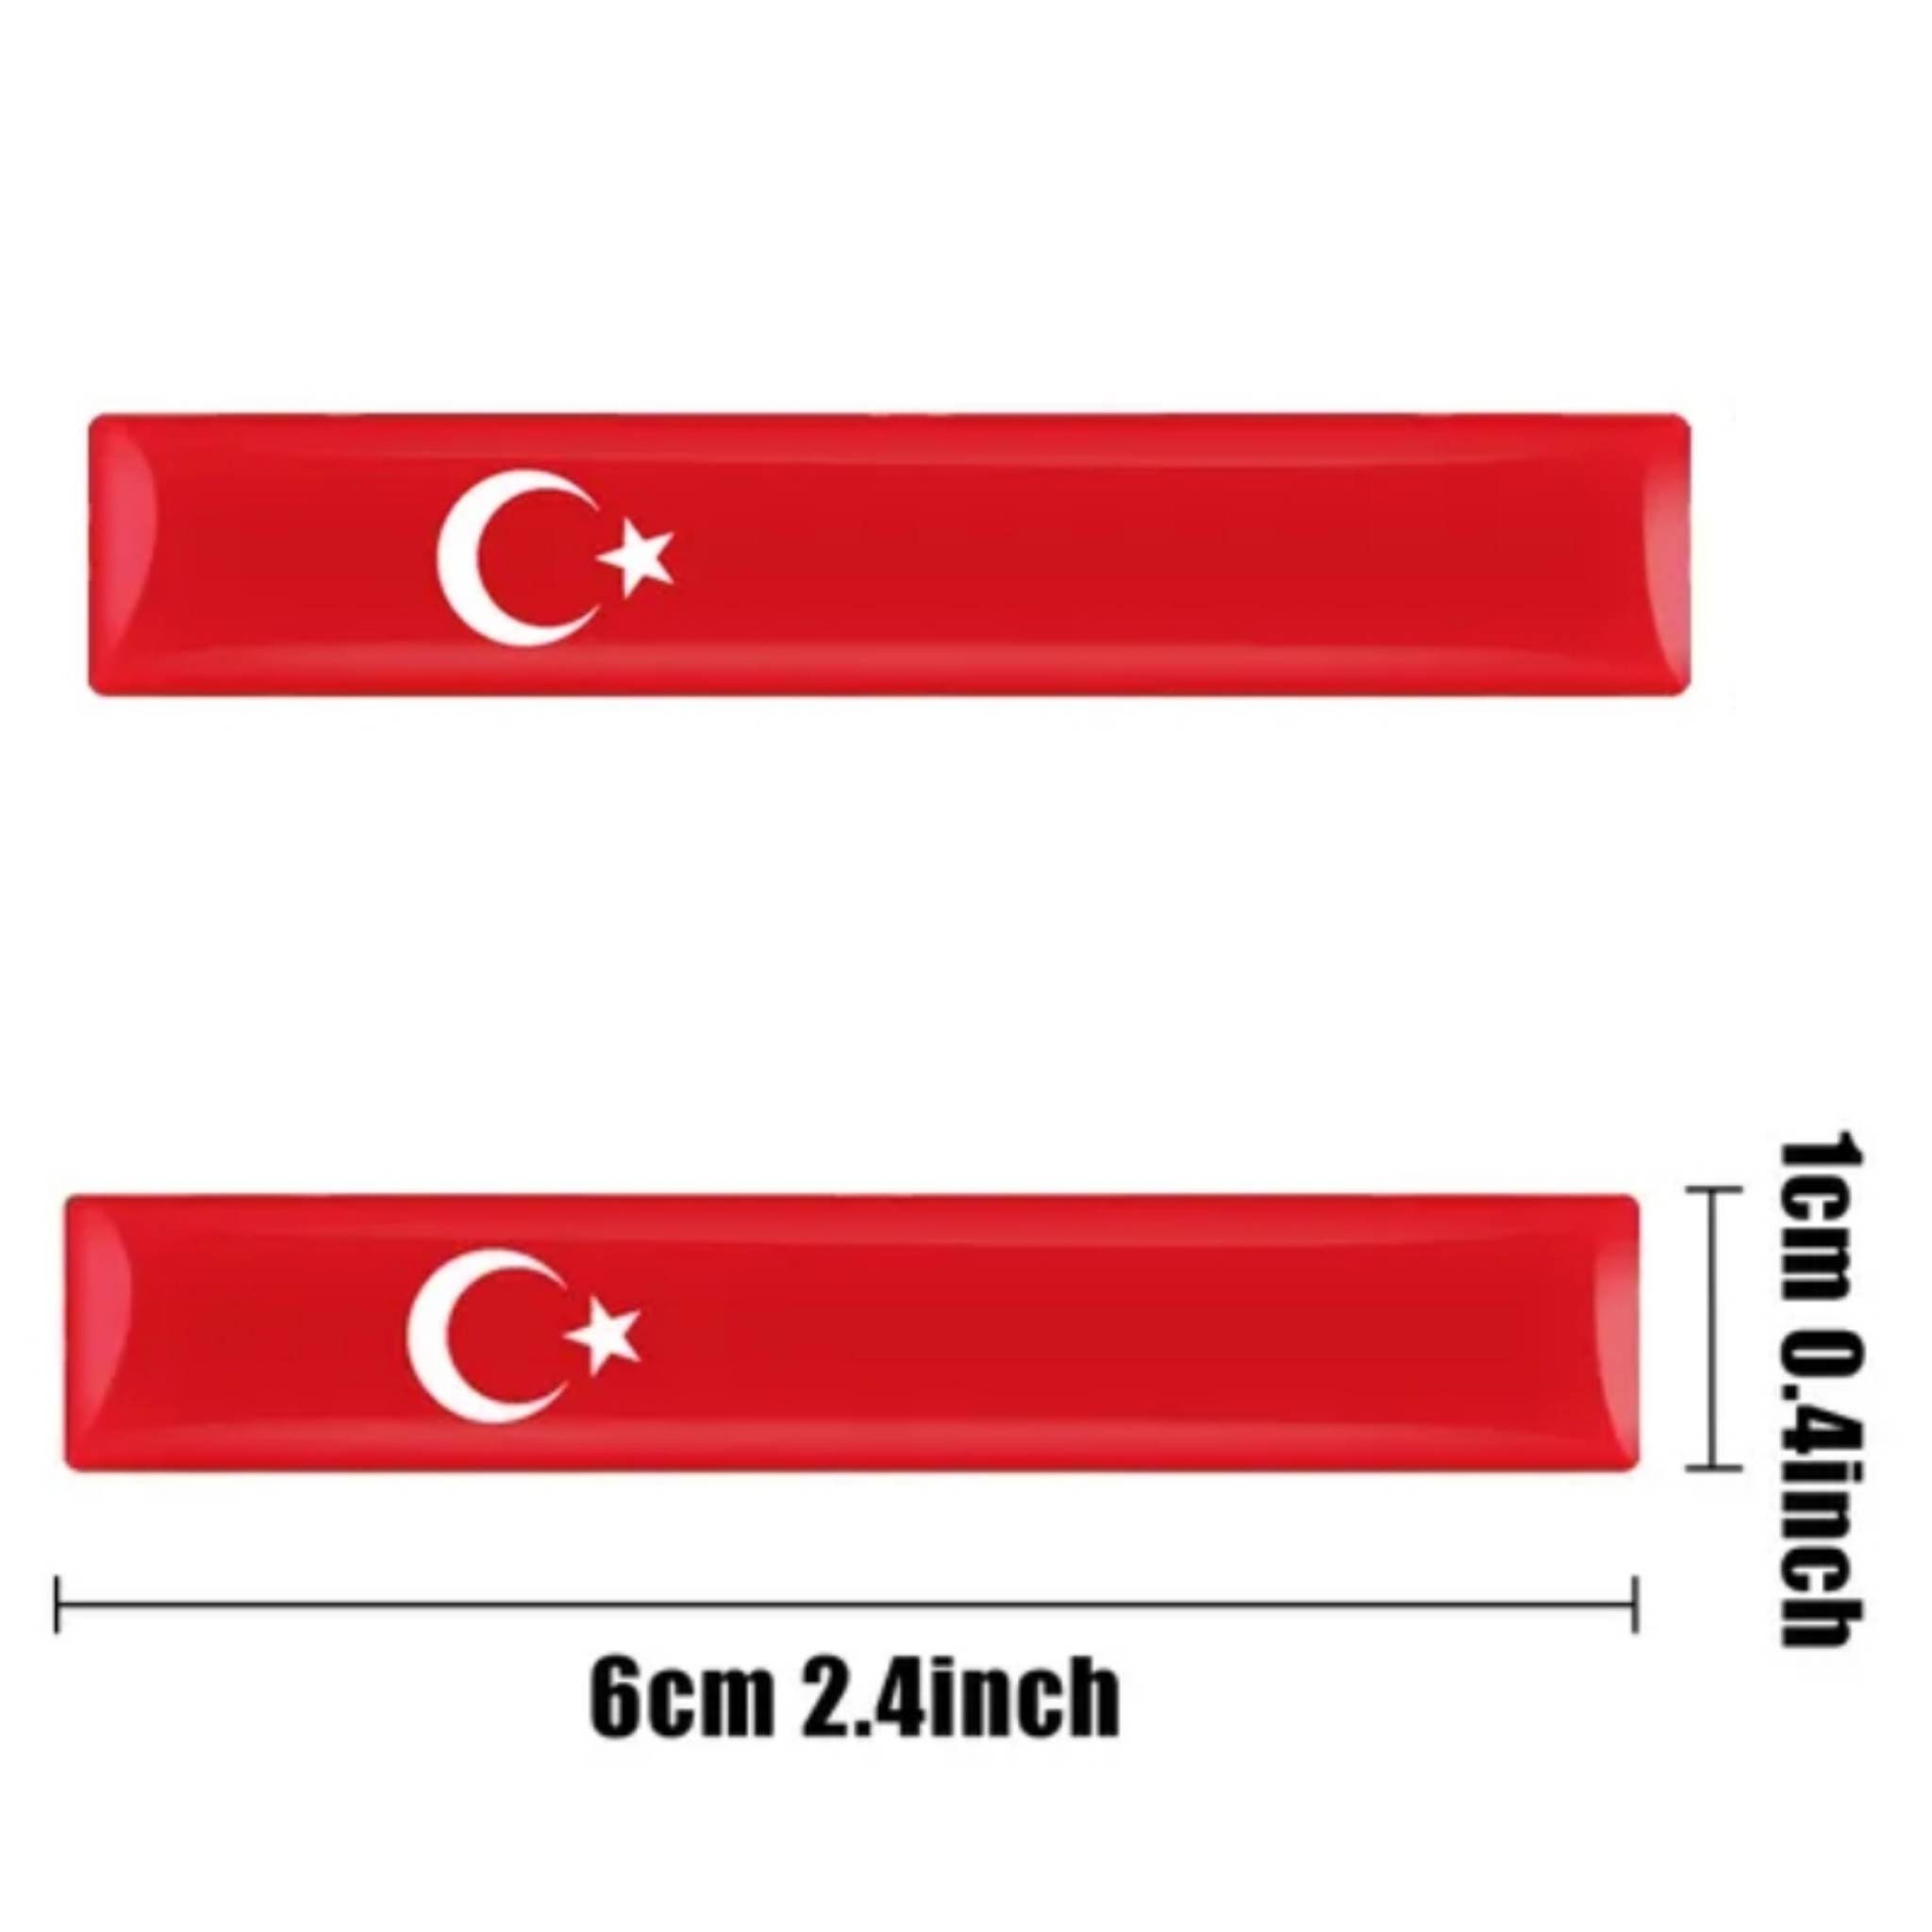 Turkey car sticker - .de